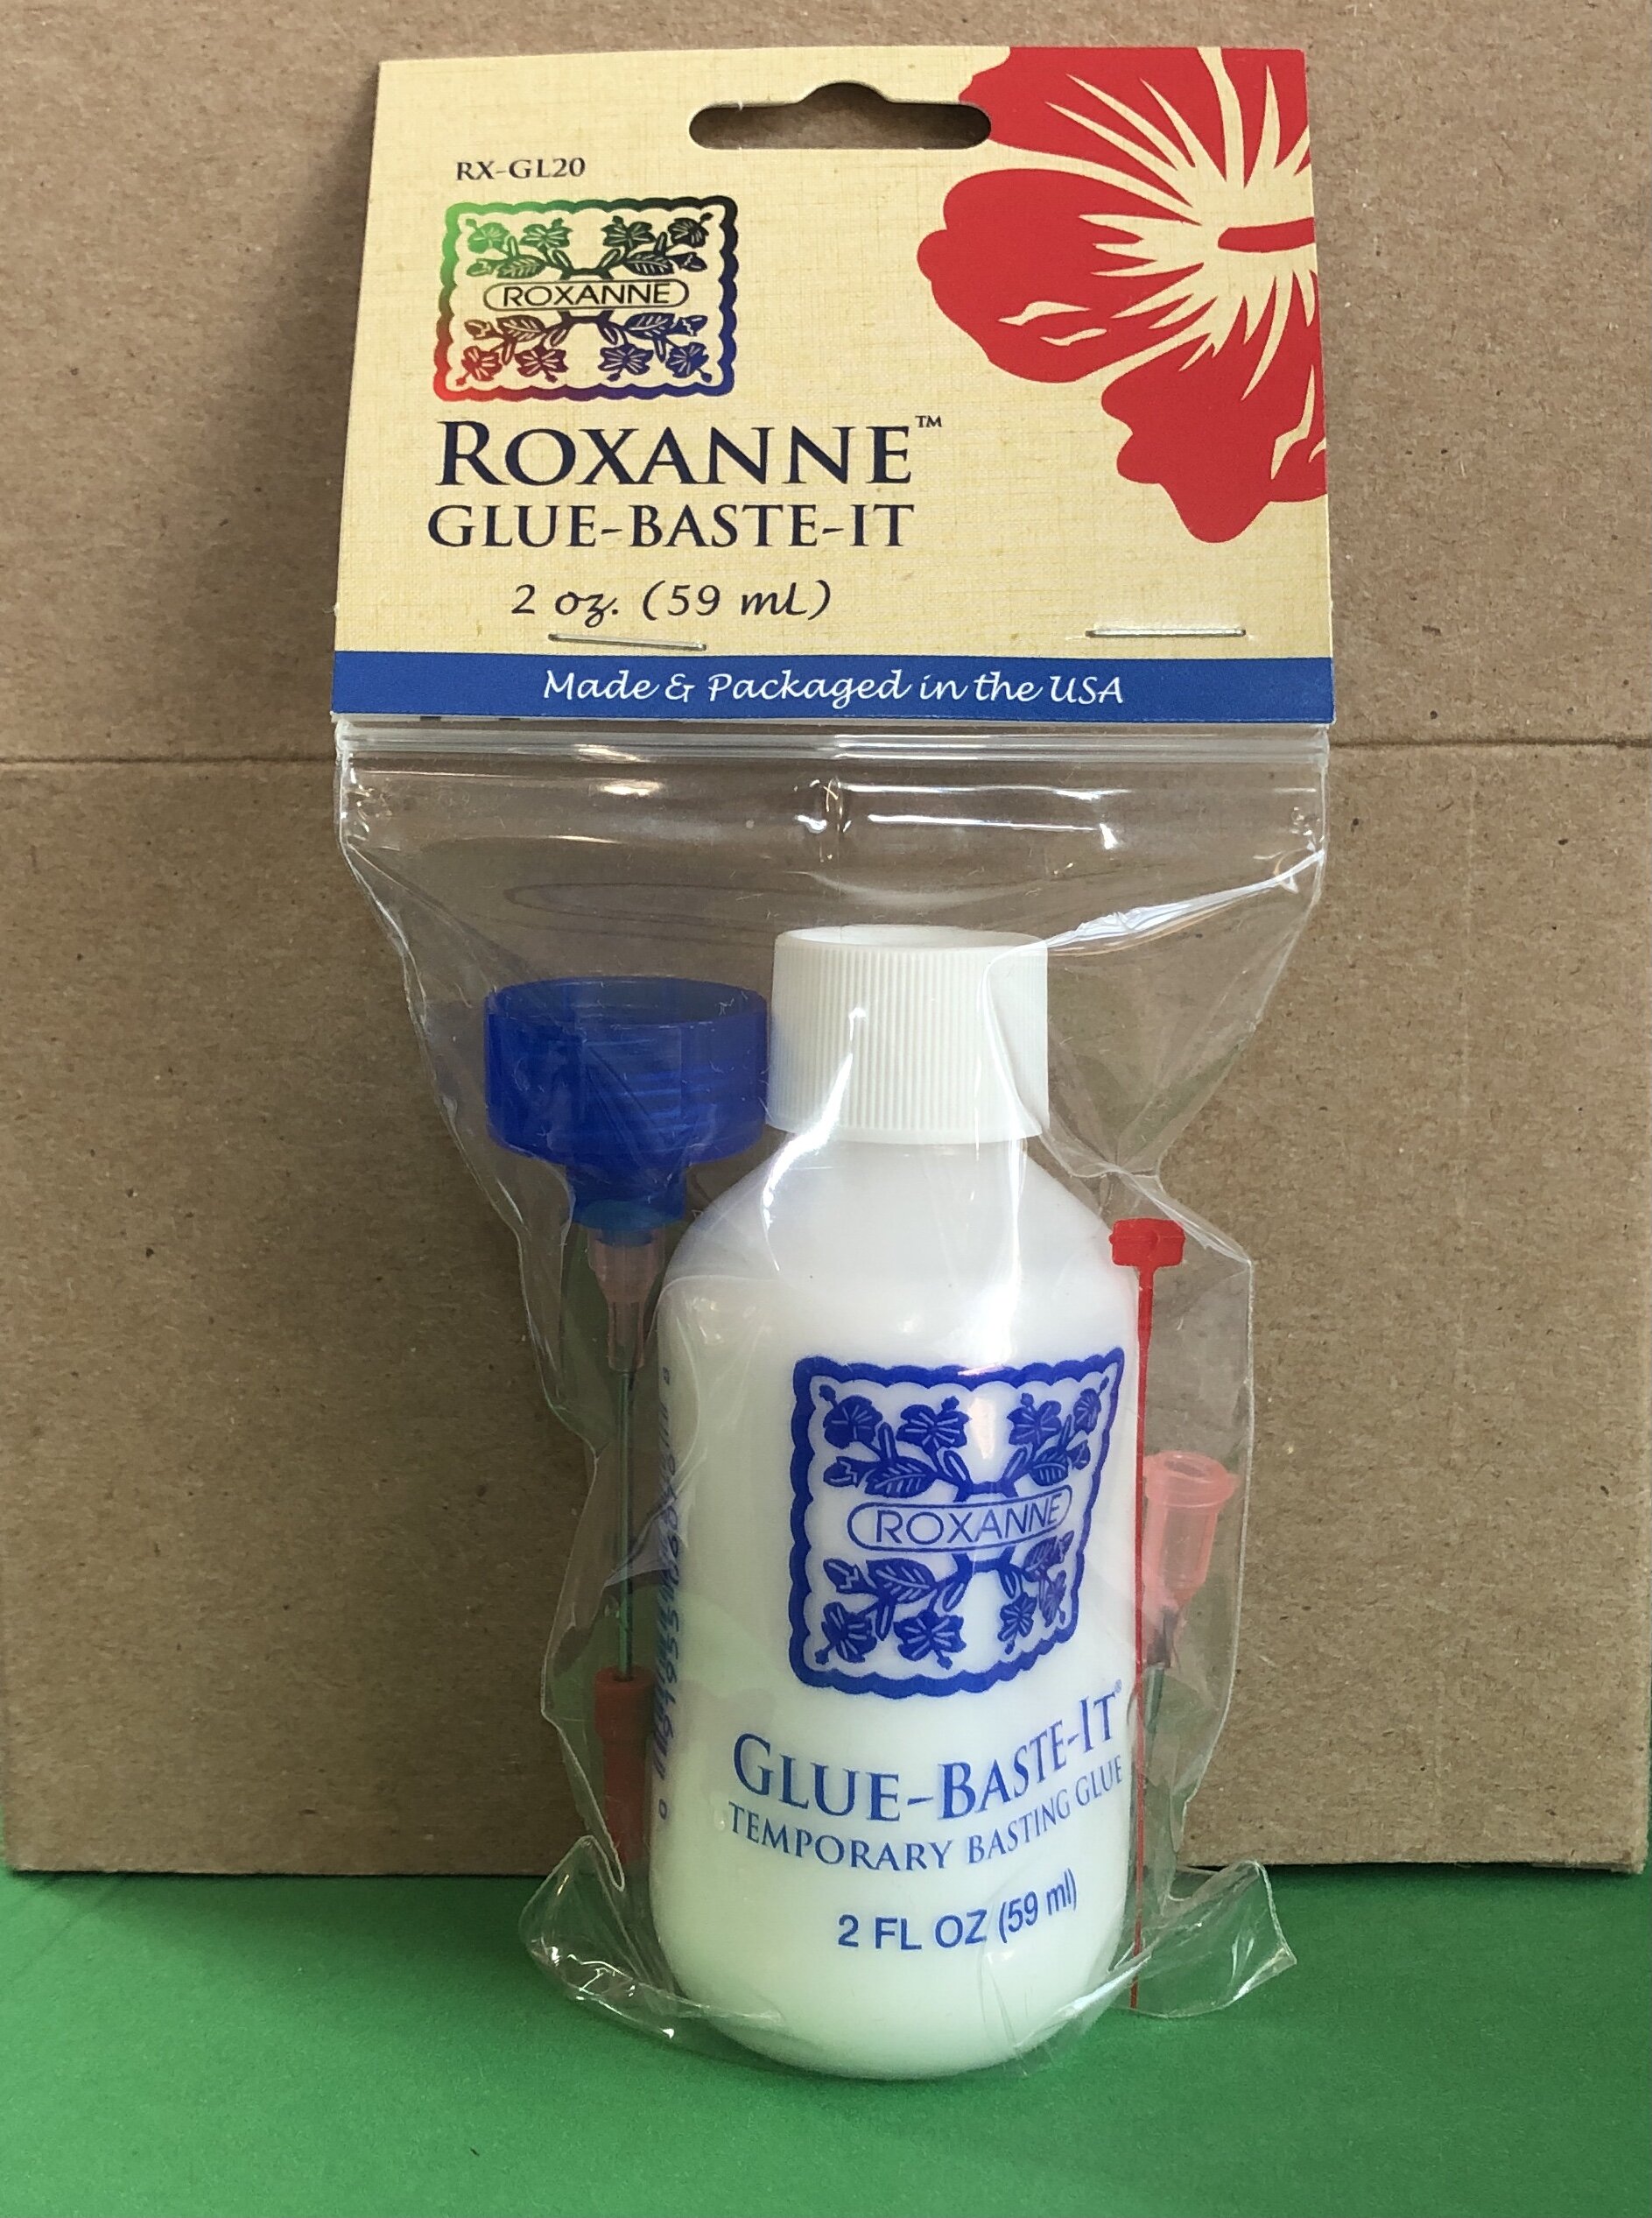 Roxanne's Glue-Baste-It, 2 oz. and 1 oz. — Eye of the Beholder